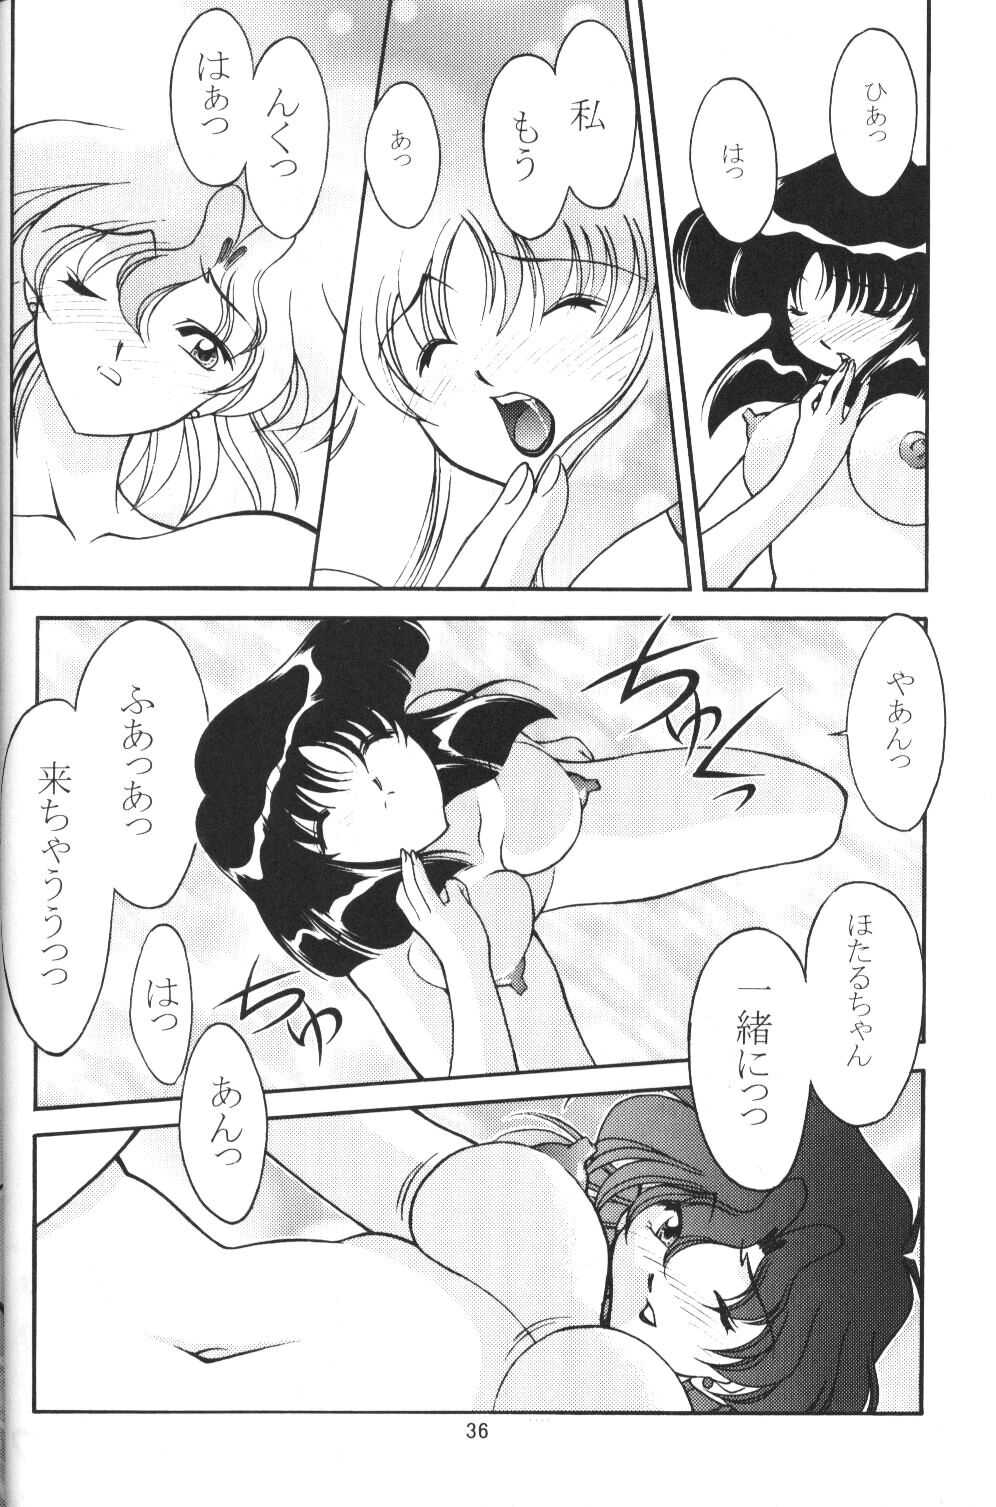 (C58) [Rose Water (Haruka Ayanokouji)] Rose Water 11 Rose Fever (Bishoujo Senshi Sailor Moon) (C58) [ROSE WATER (綾小路はるか)] ROSE WATER 11 ROSE FEVER (美少女戦士セーラームーン)